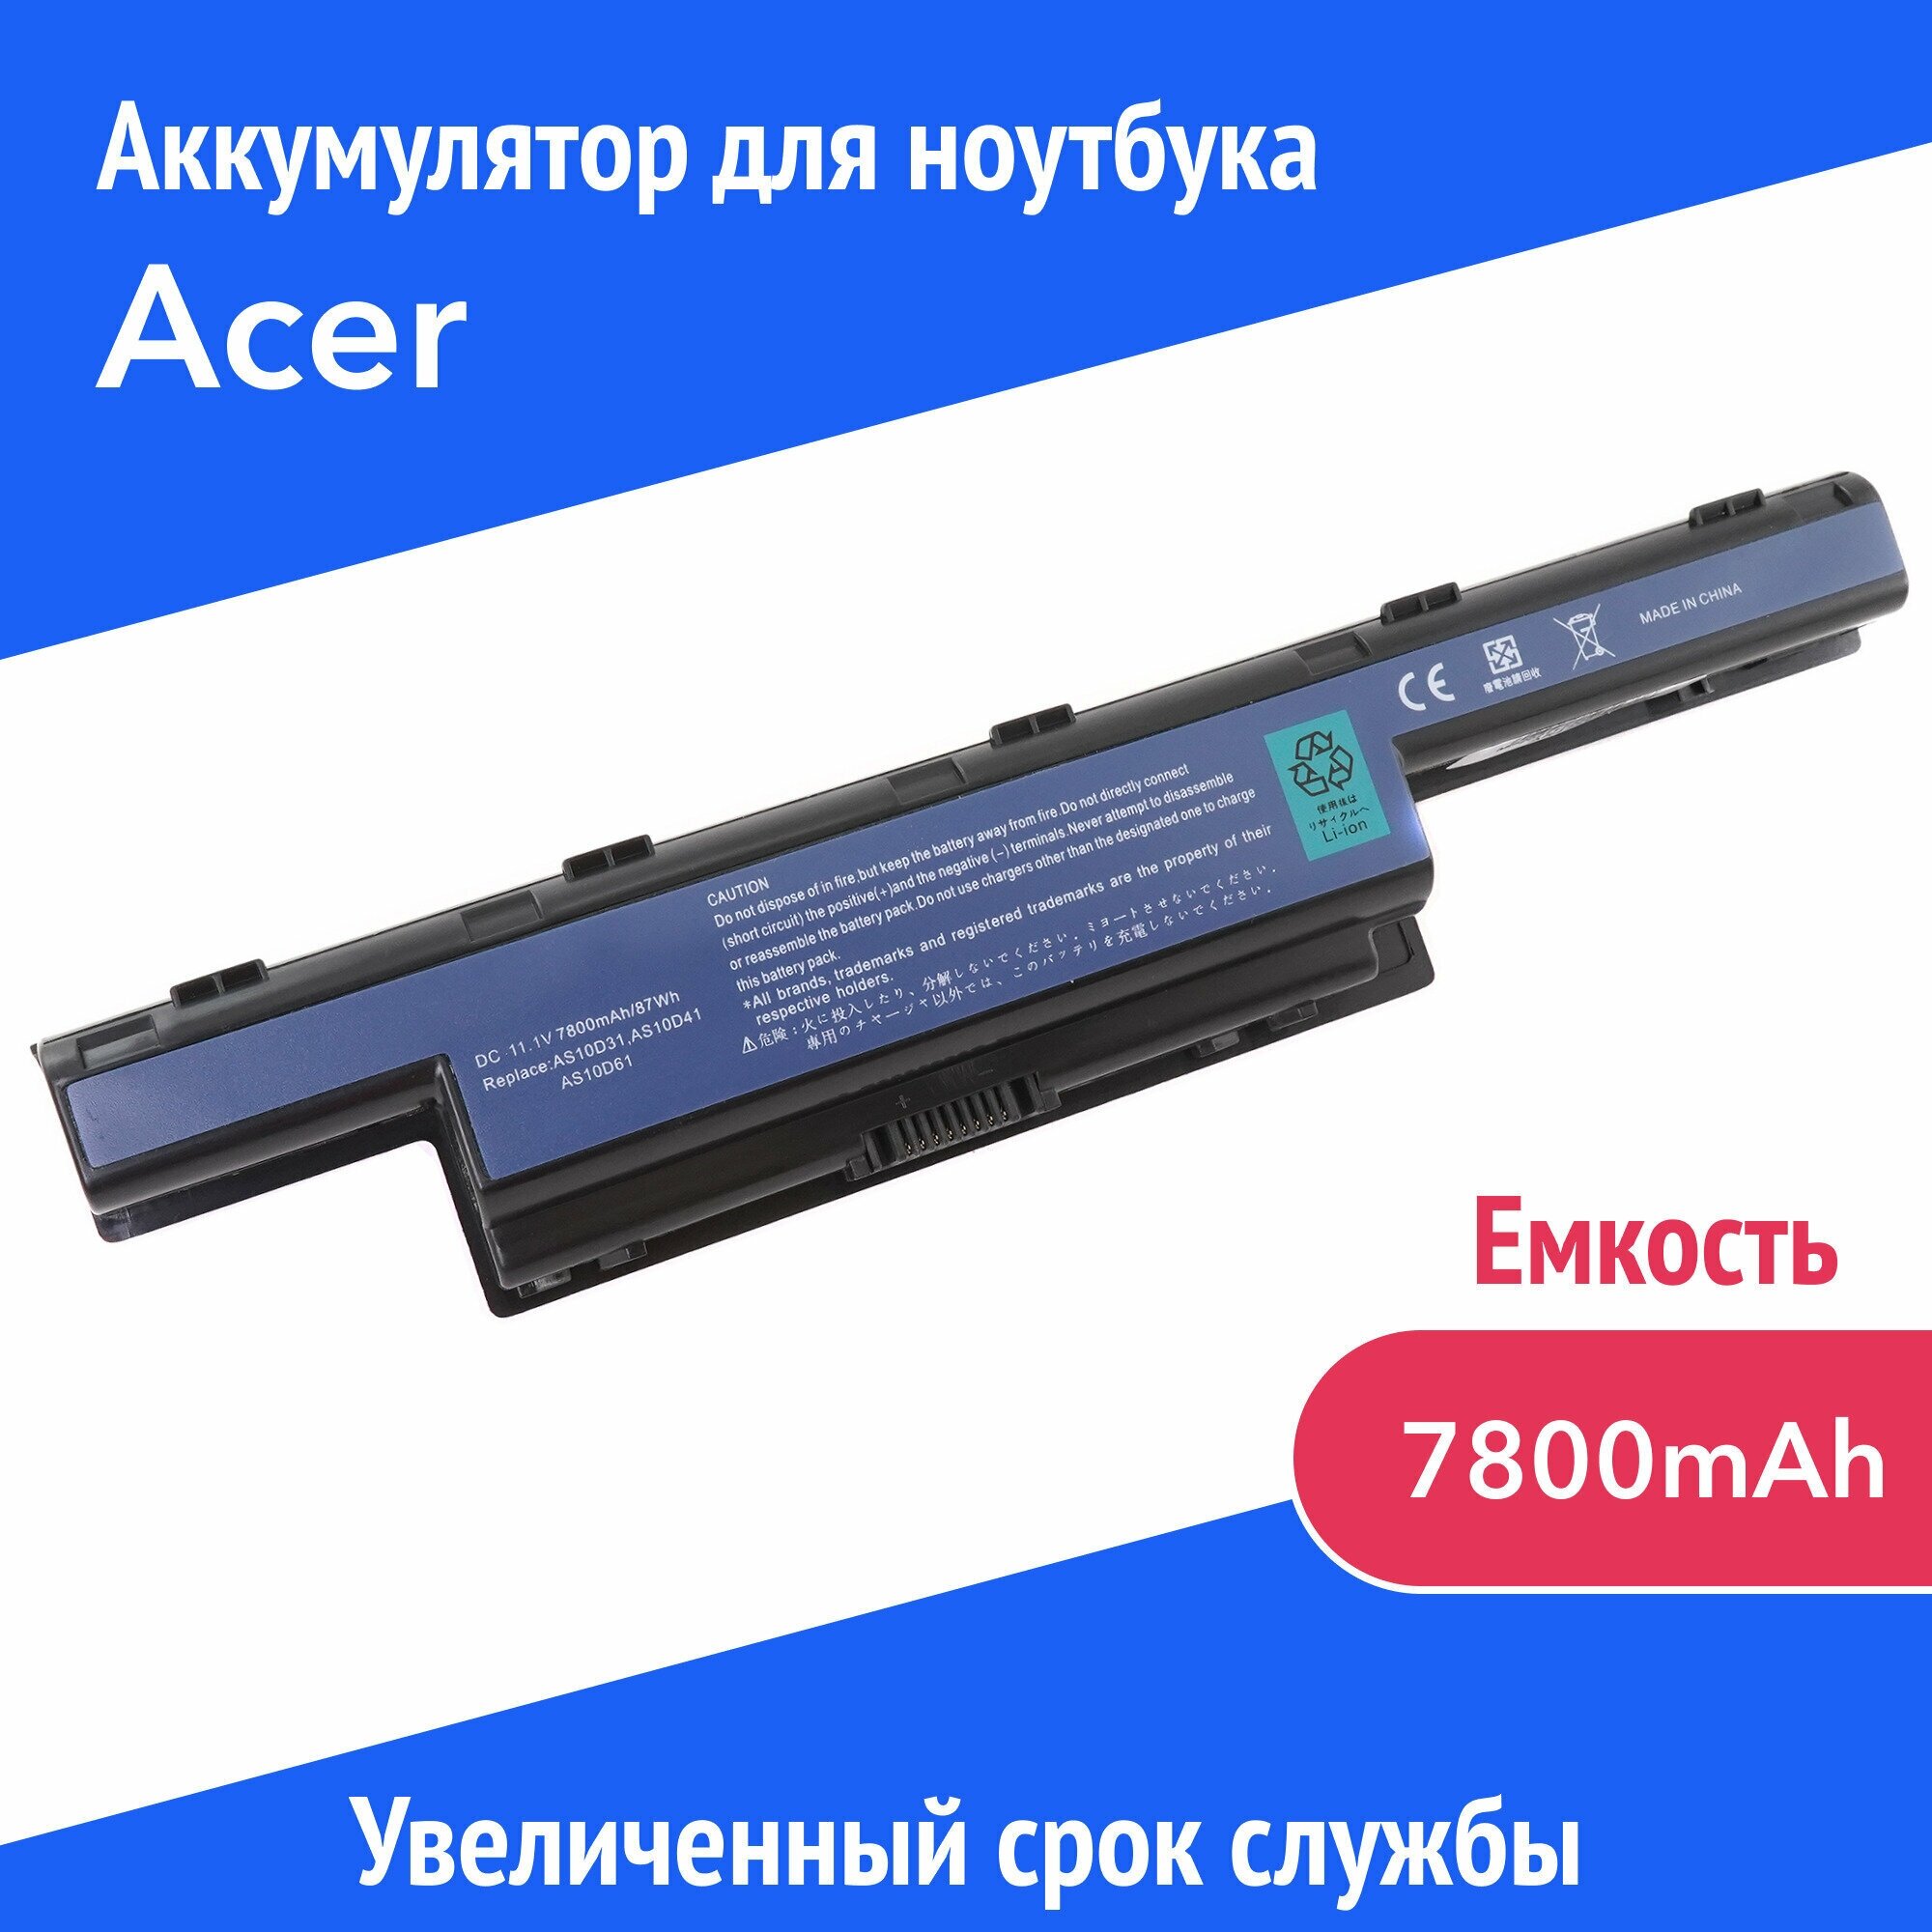 Аккумулятор AS10D31 для Acer Aspire 5551 / 5741 / 7551 / 7741 / E1-421 / E1-771 / V3-551 (AS10D51 AS10D56 AS10D61) 7800mAh